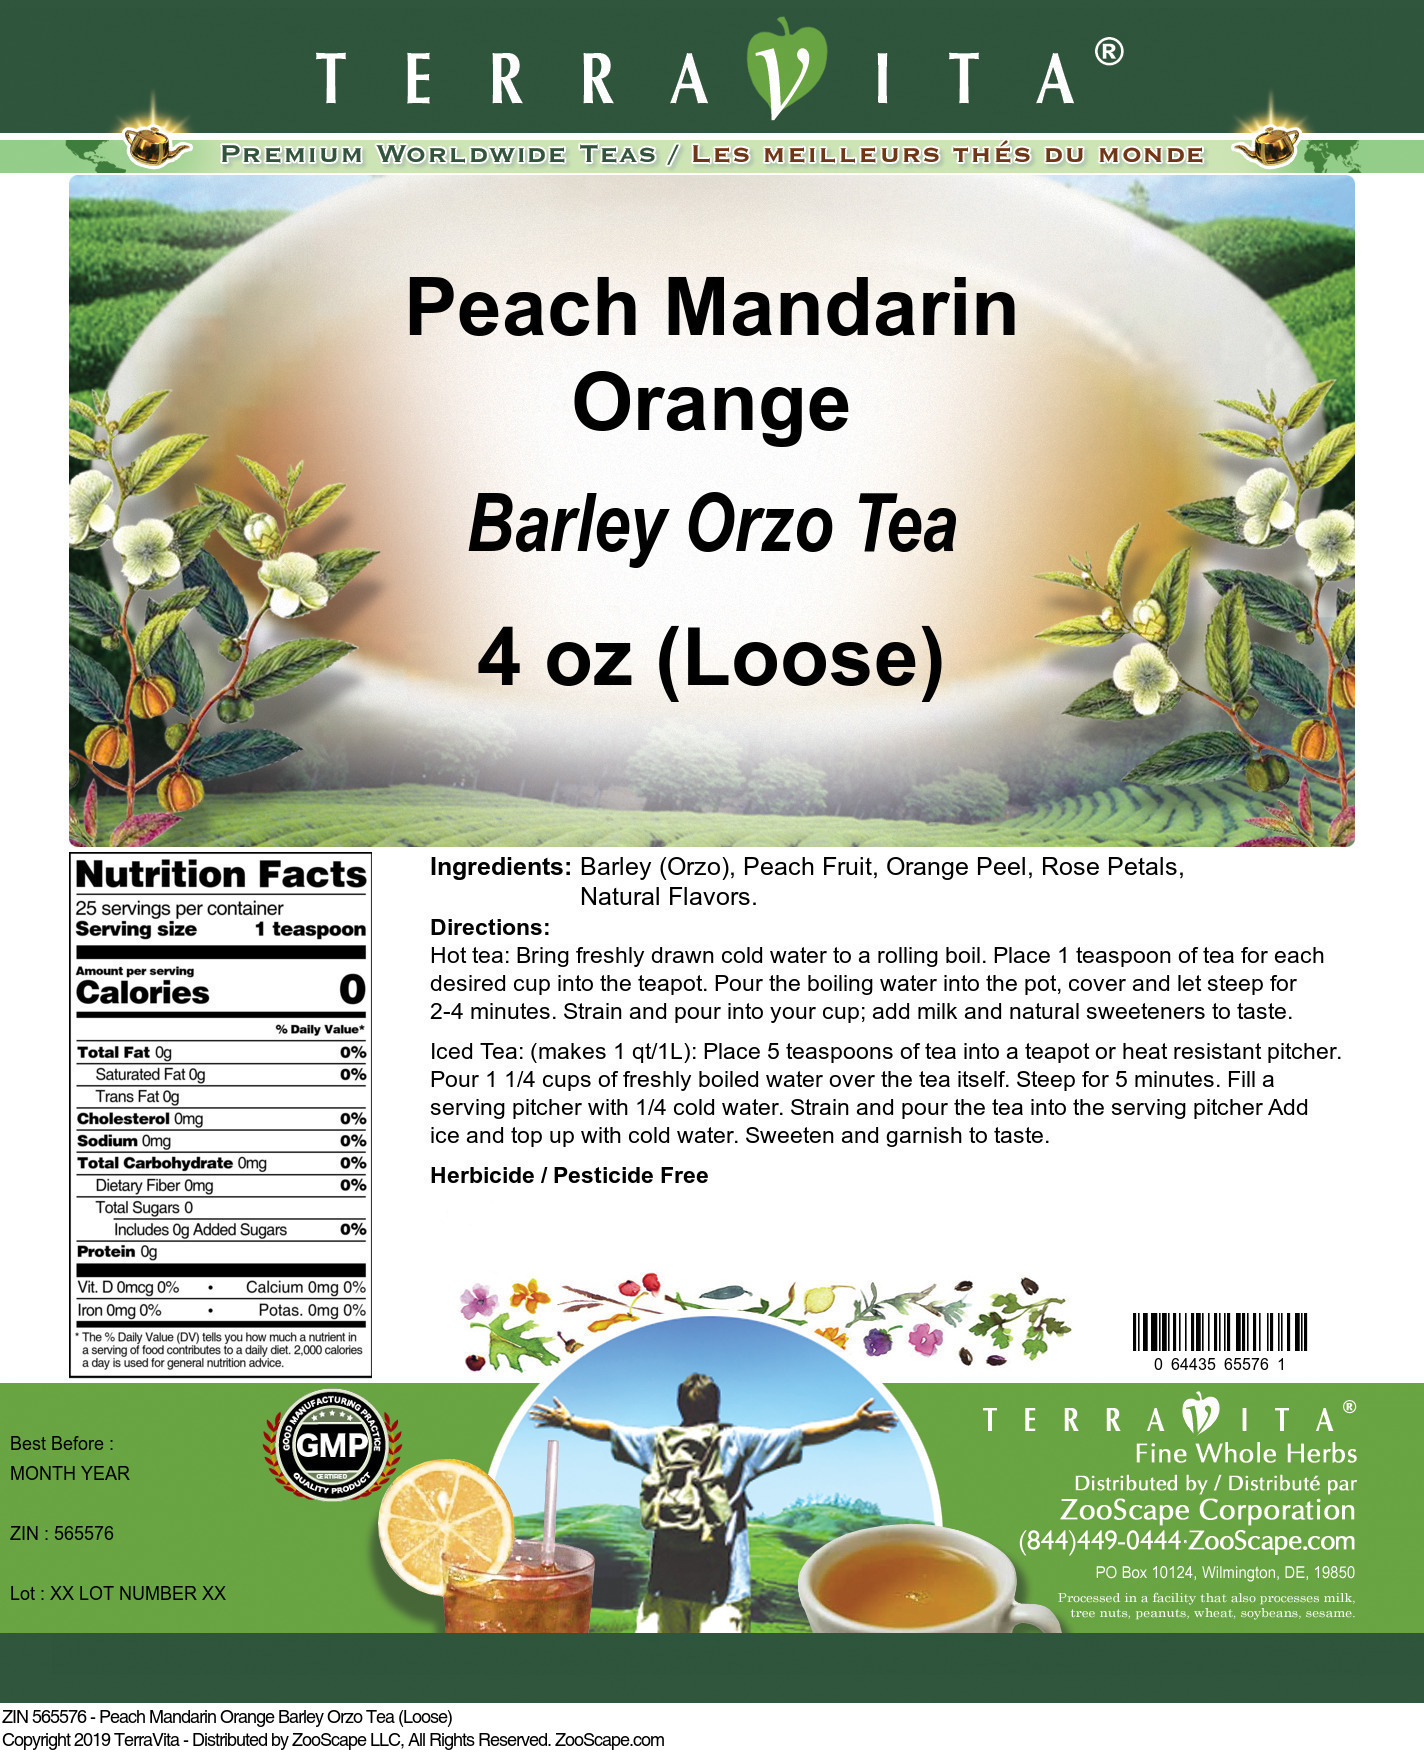 Peach Mandarin Orange Barley Orzo Tea (Loose) - Label